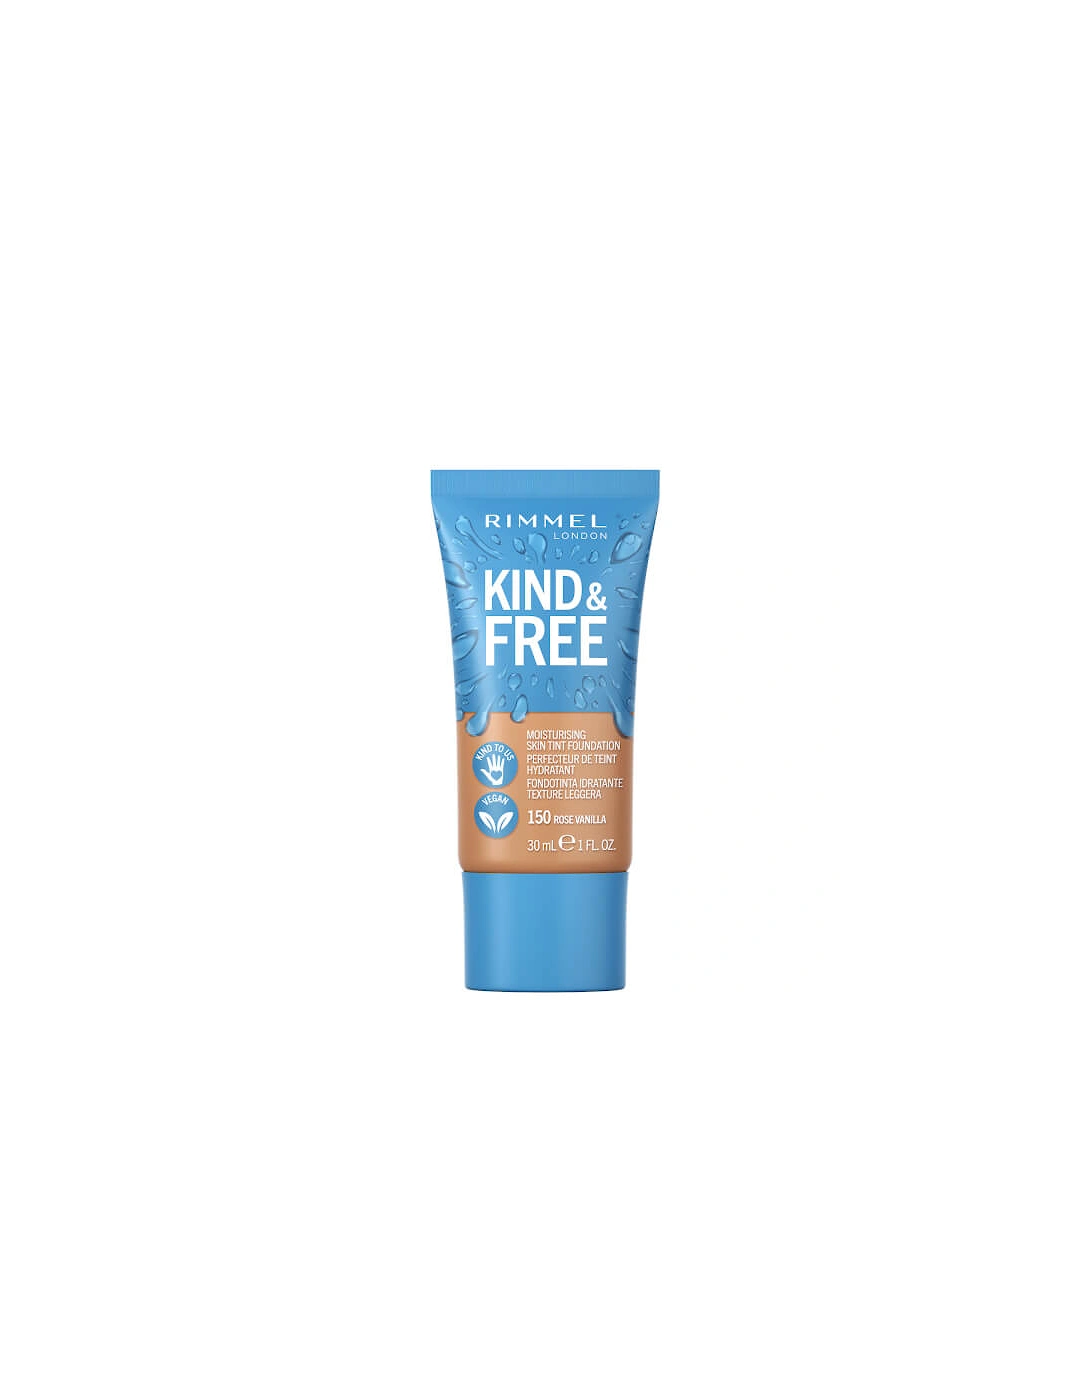 Kind and Free Skin Tint Moisturising Foundation - Rose Vanilla, 2 of 1